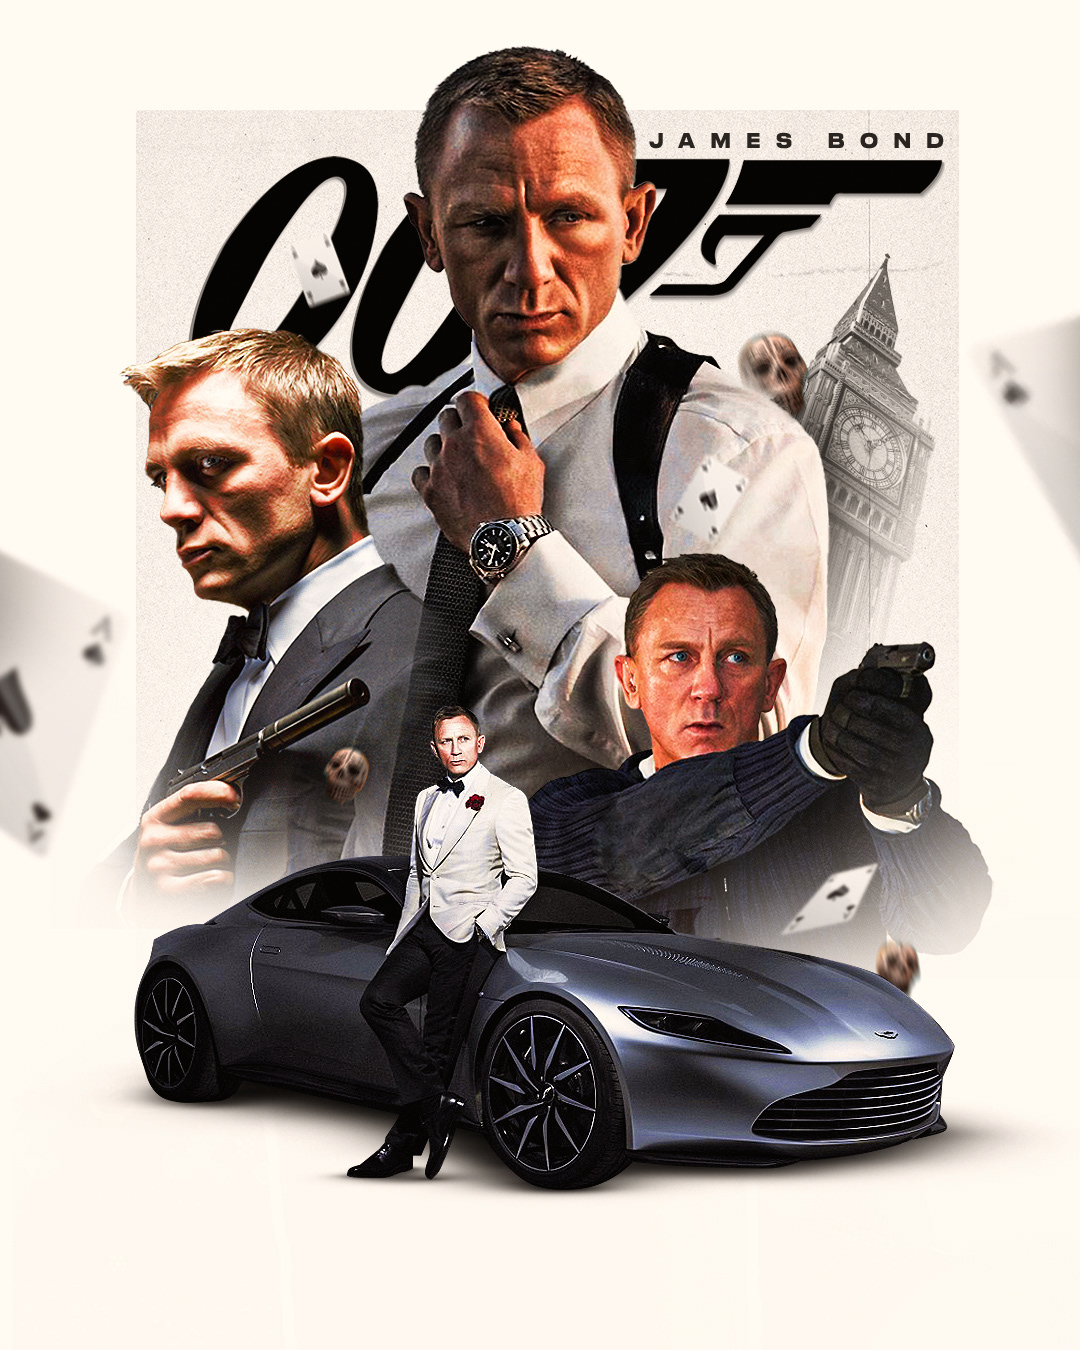 007 james bond 007 Bond hollywood Cinema 007 Spectre james bond daniel craig skyfall casino royale